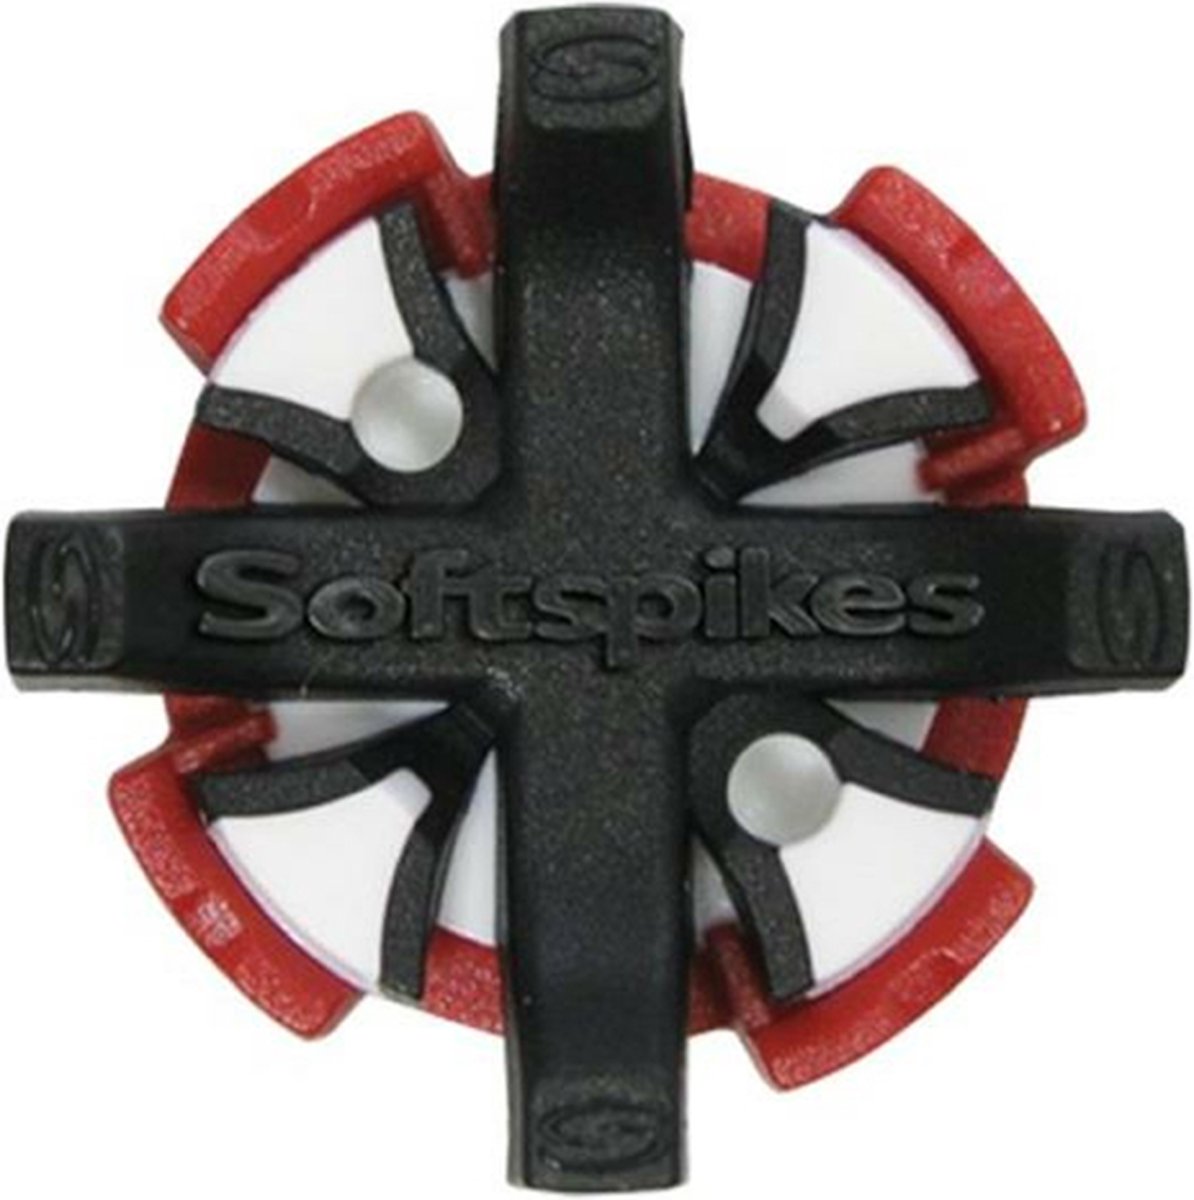 Soft Spikes Black Widow Tour Metalen Thread 6mm - rood/wit/zwart - 22 stuks